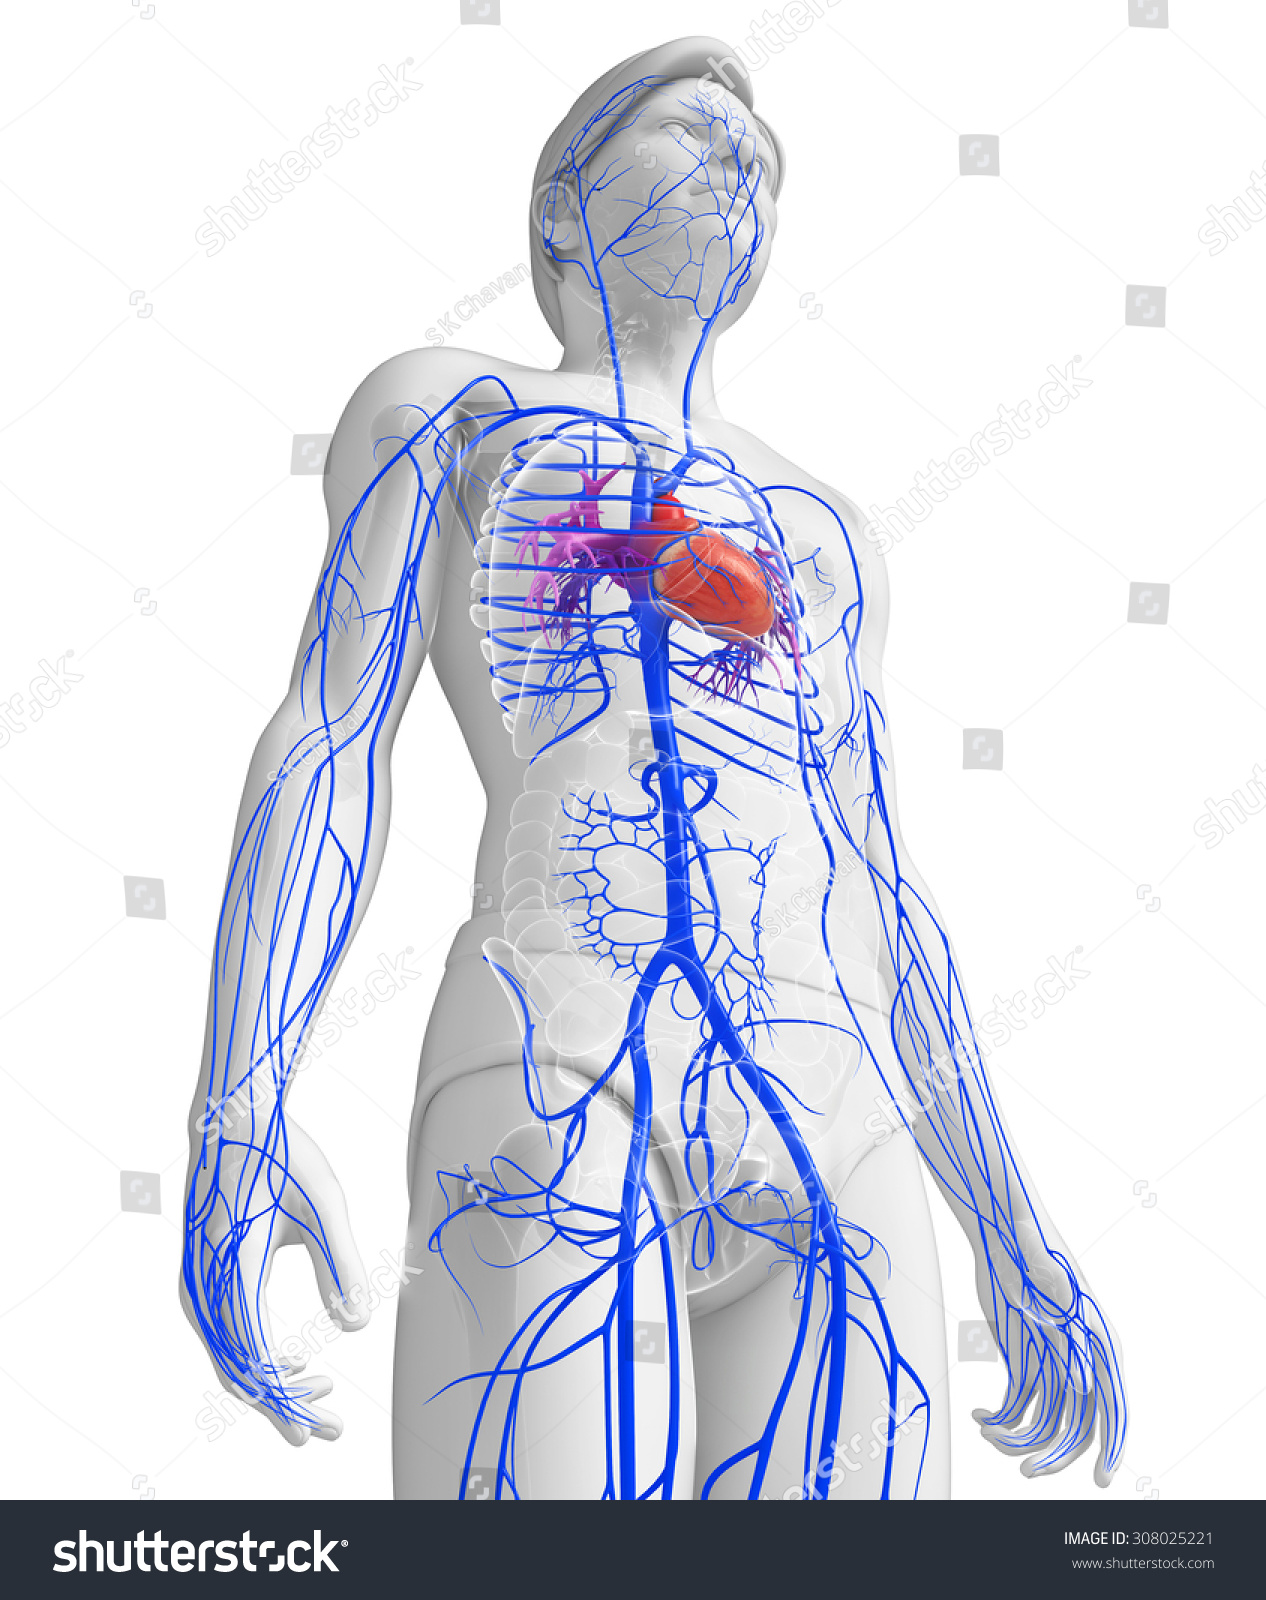 3d Rendered Illustration Of Male Heart Anatomy - 308025221 : Shutterstock